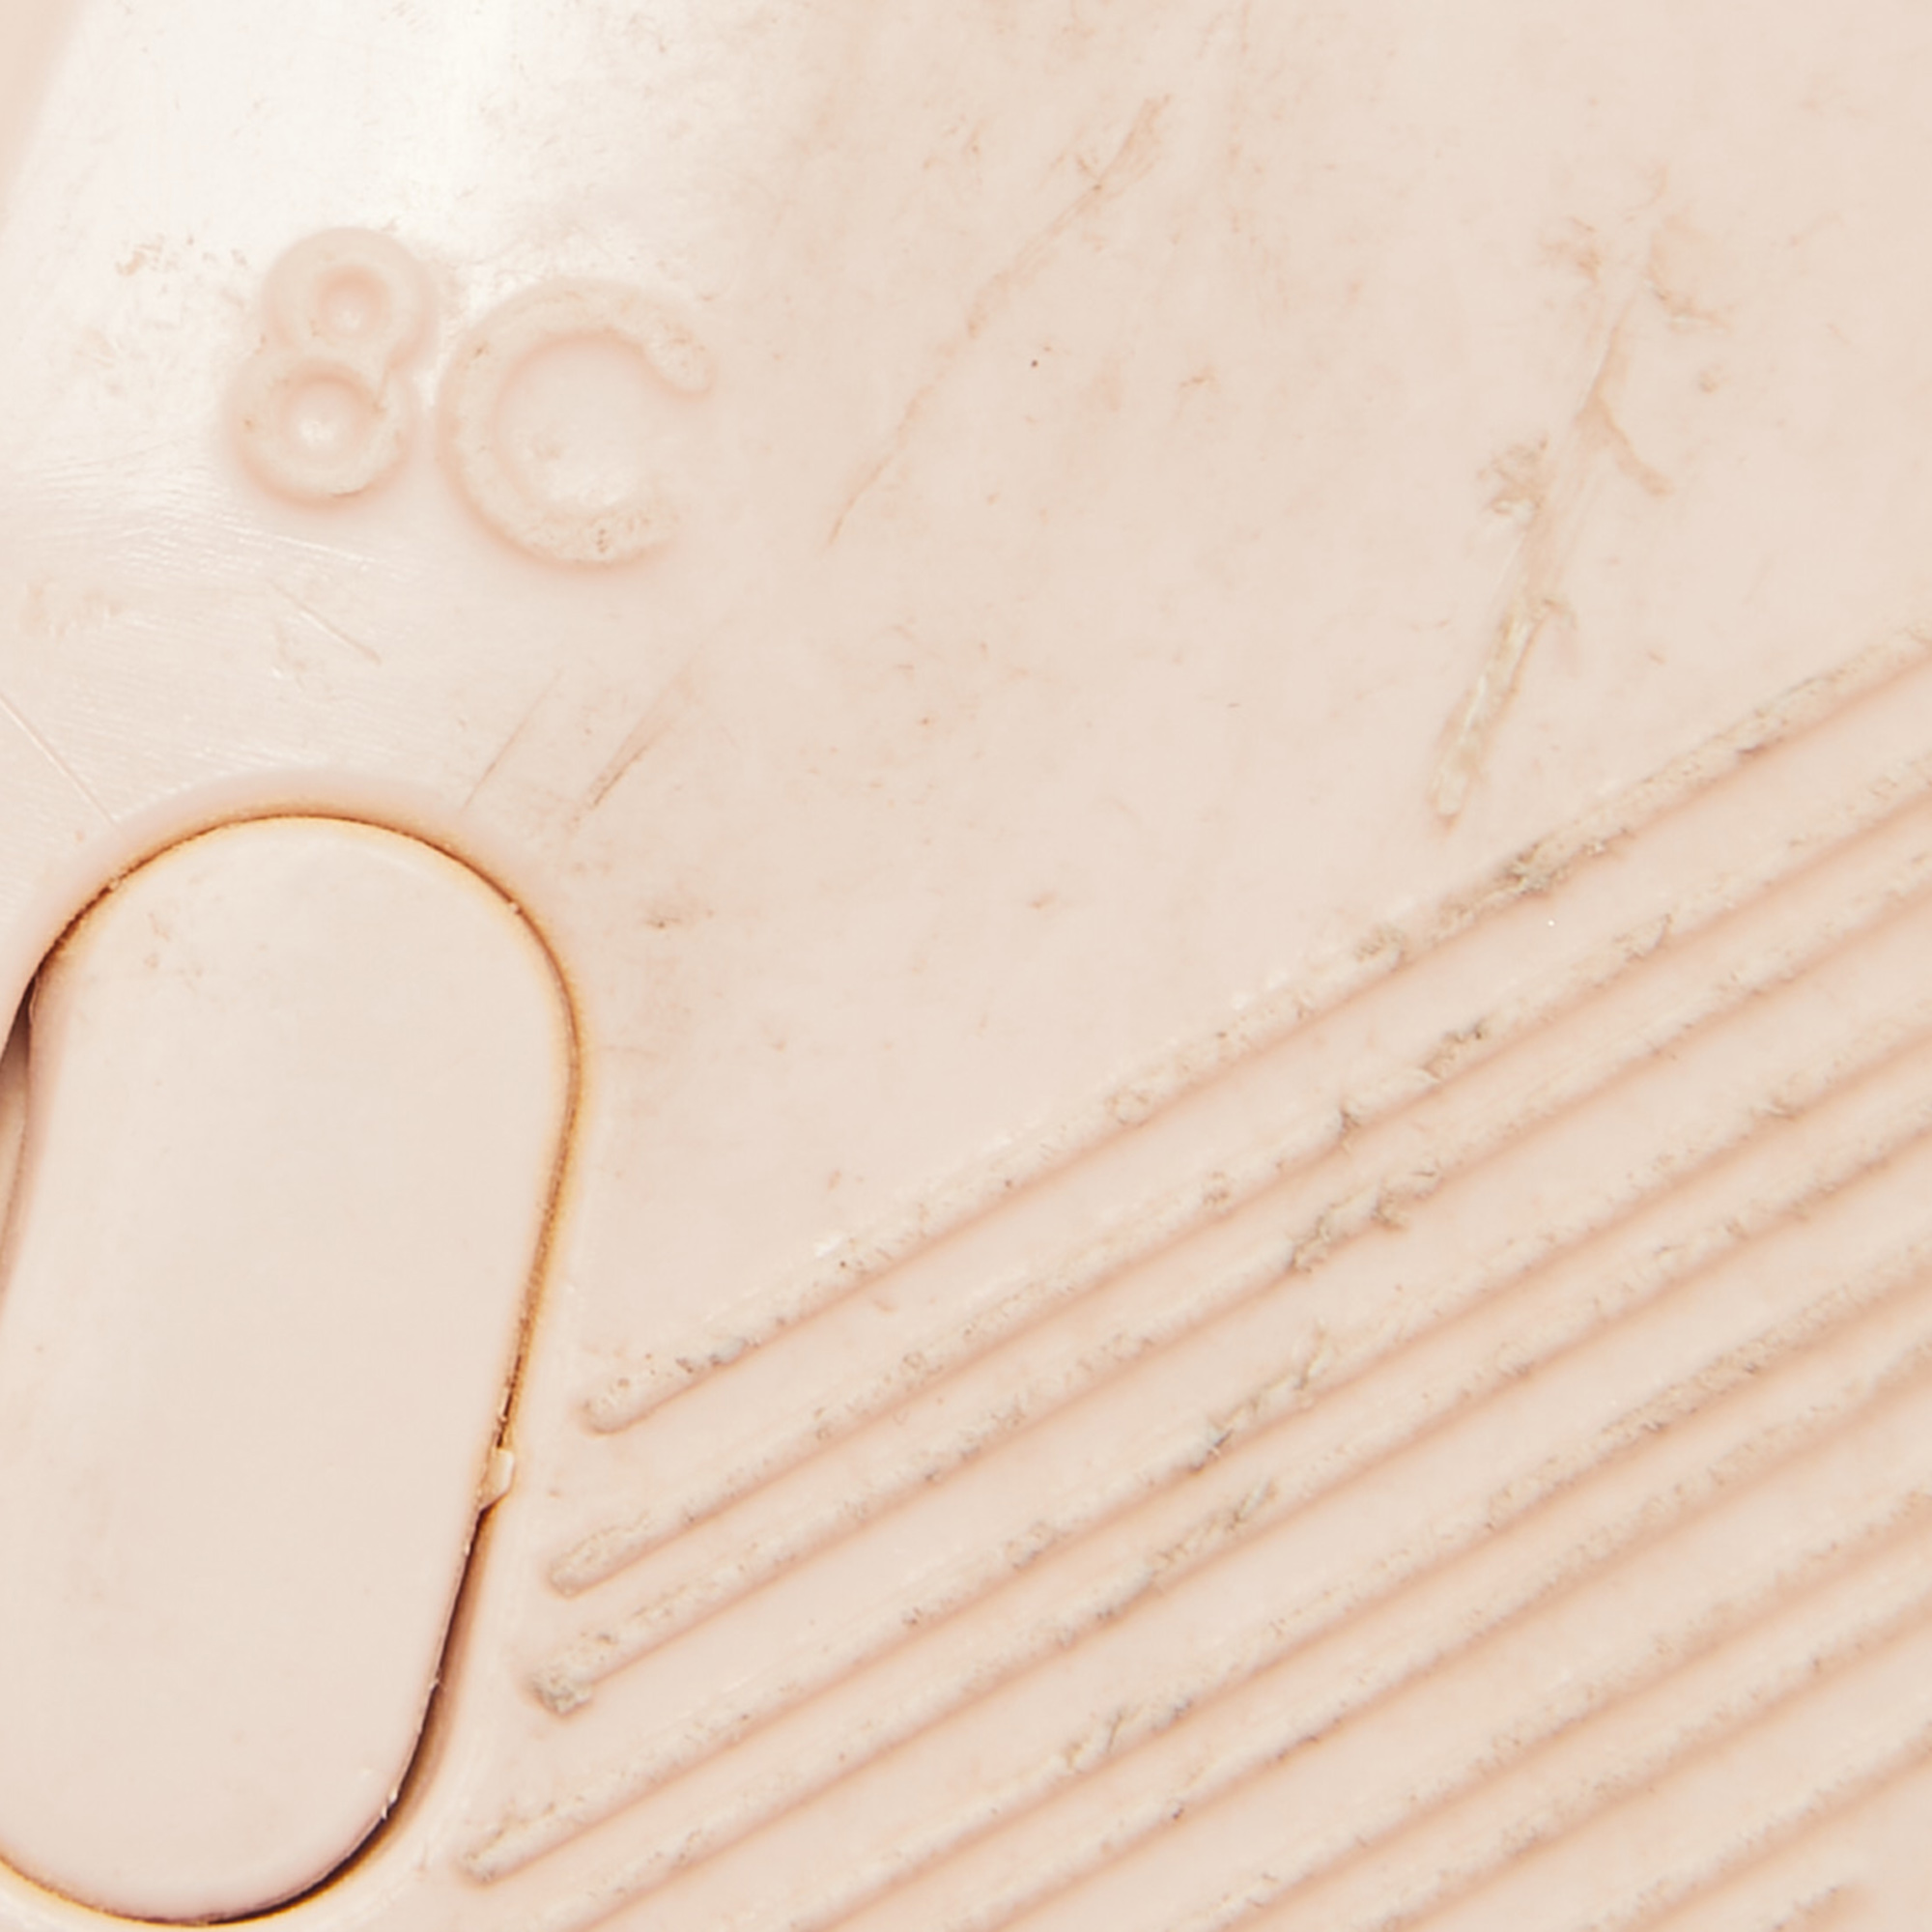 Salvatore Ferragamo Pink Jelly Bow Detailed Flat Slides Size 38.5